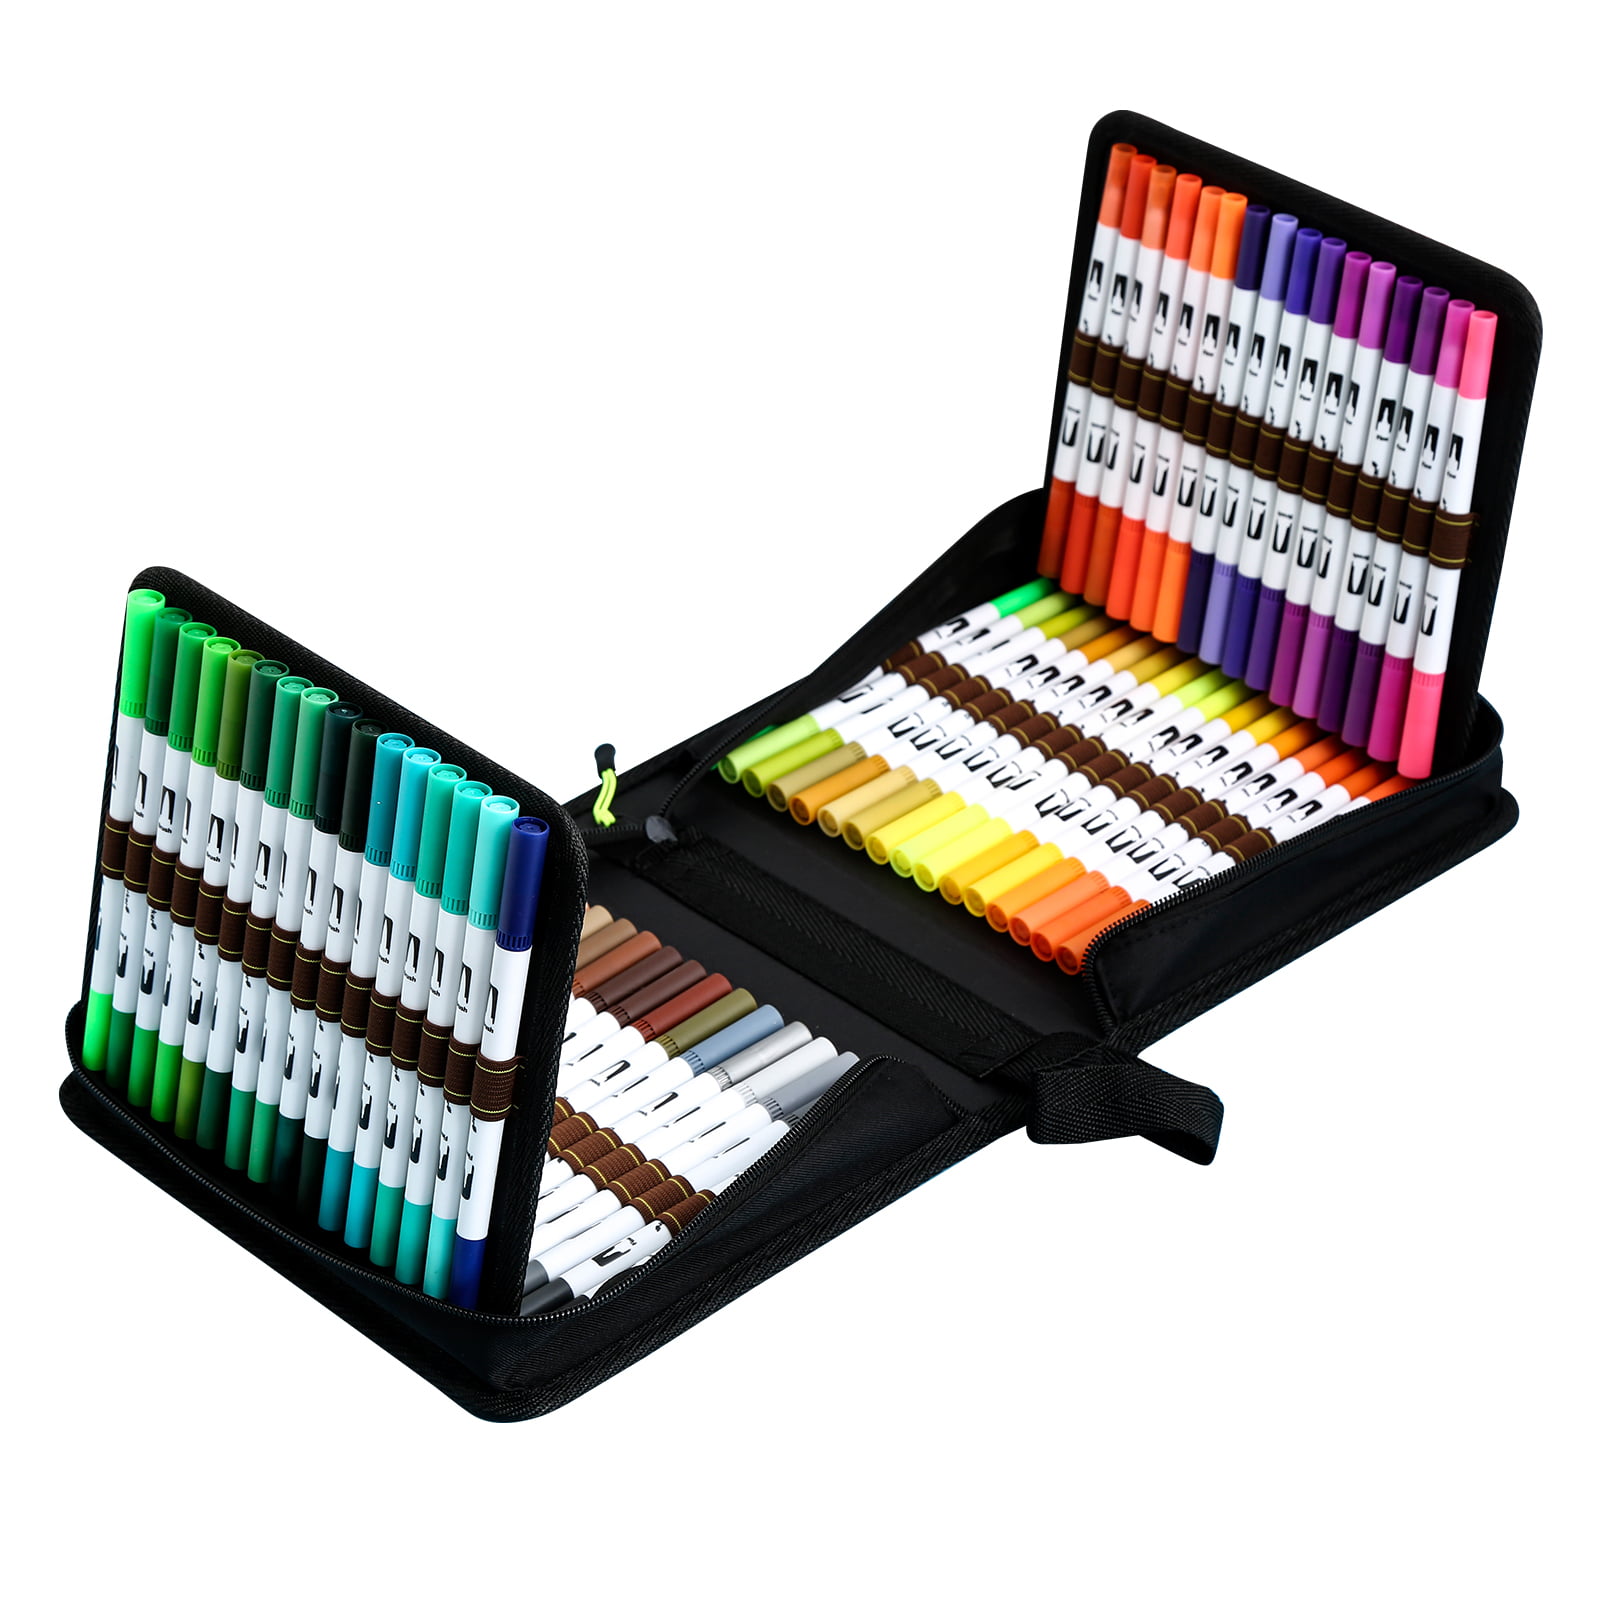 🎨 Hethrone 120 Dual Brush Pen Markers - Adult Coloring…